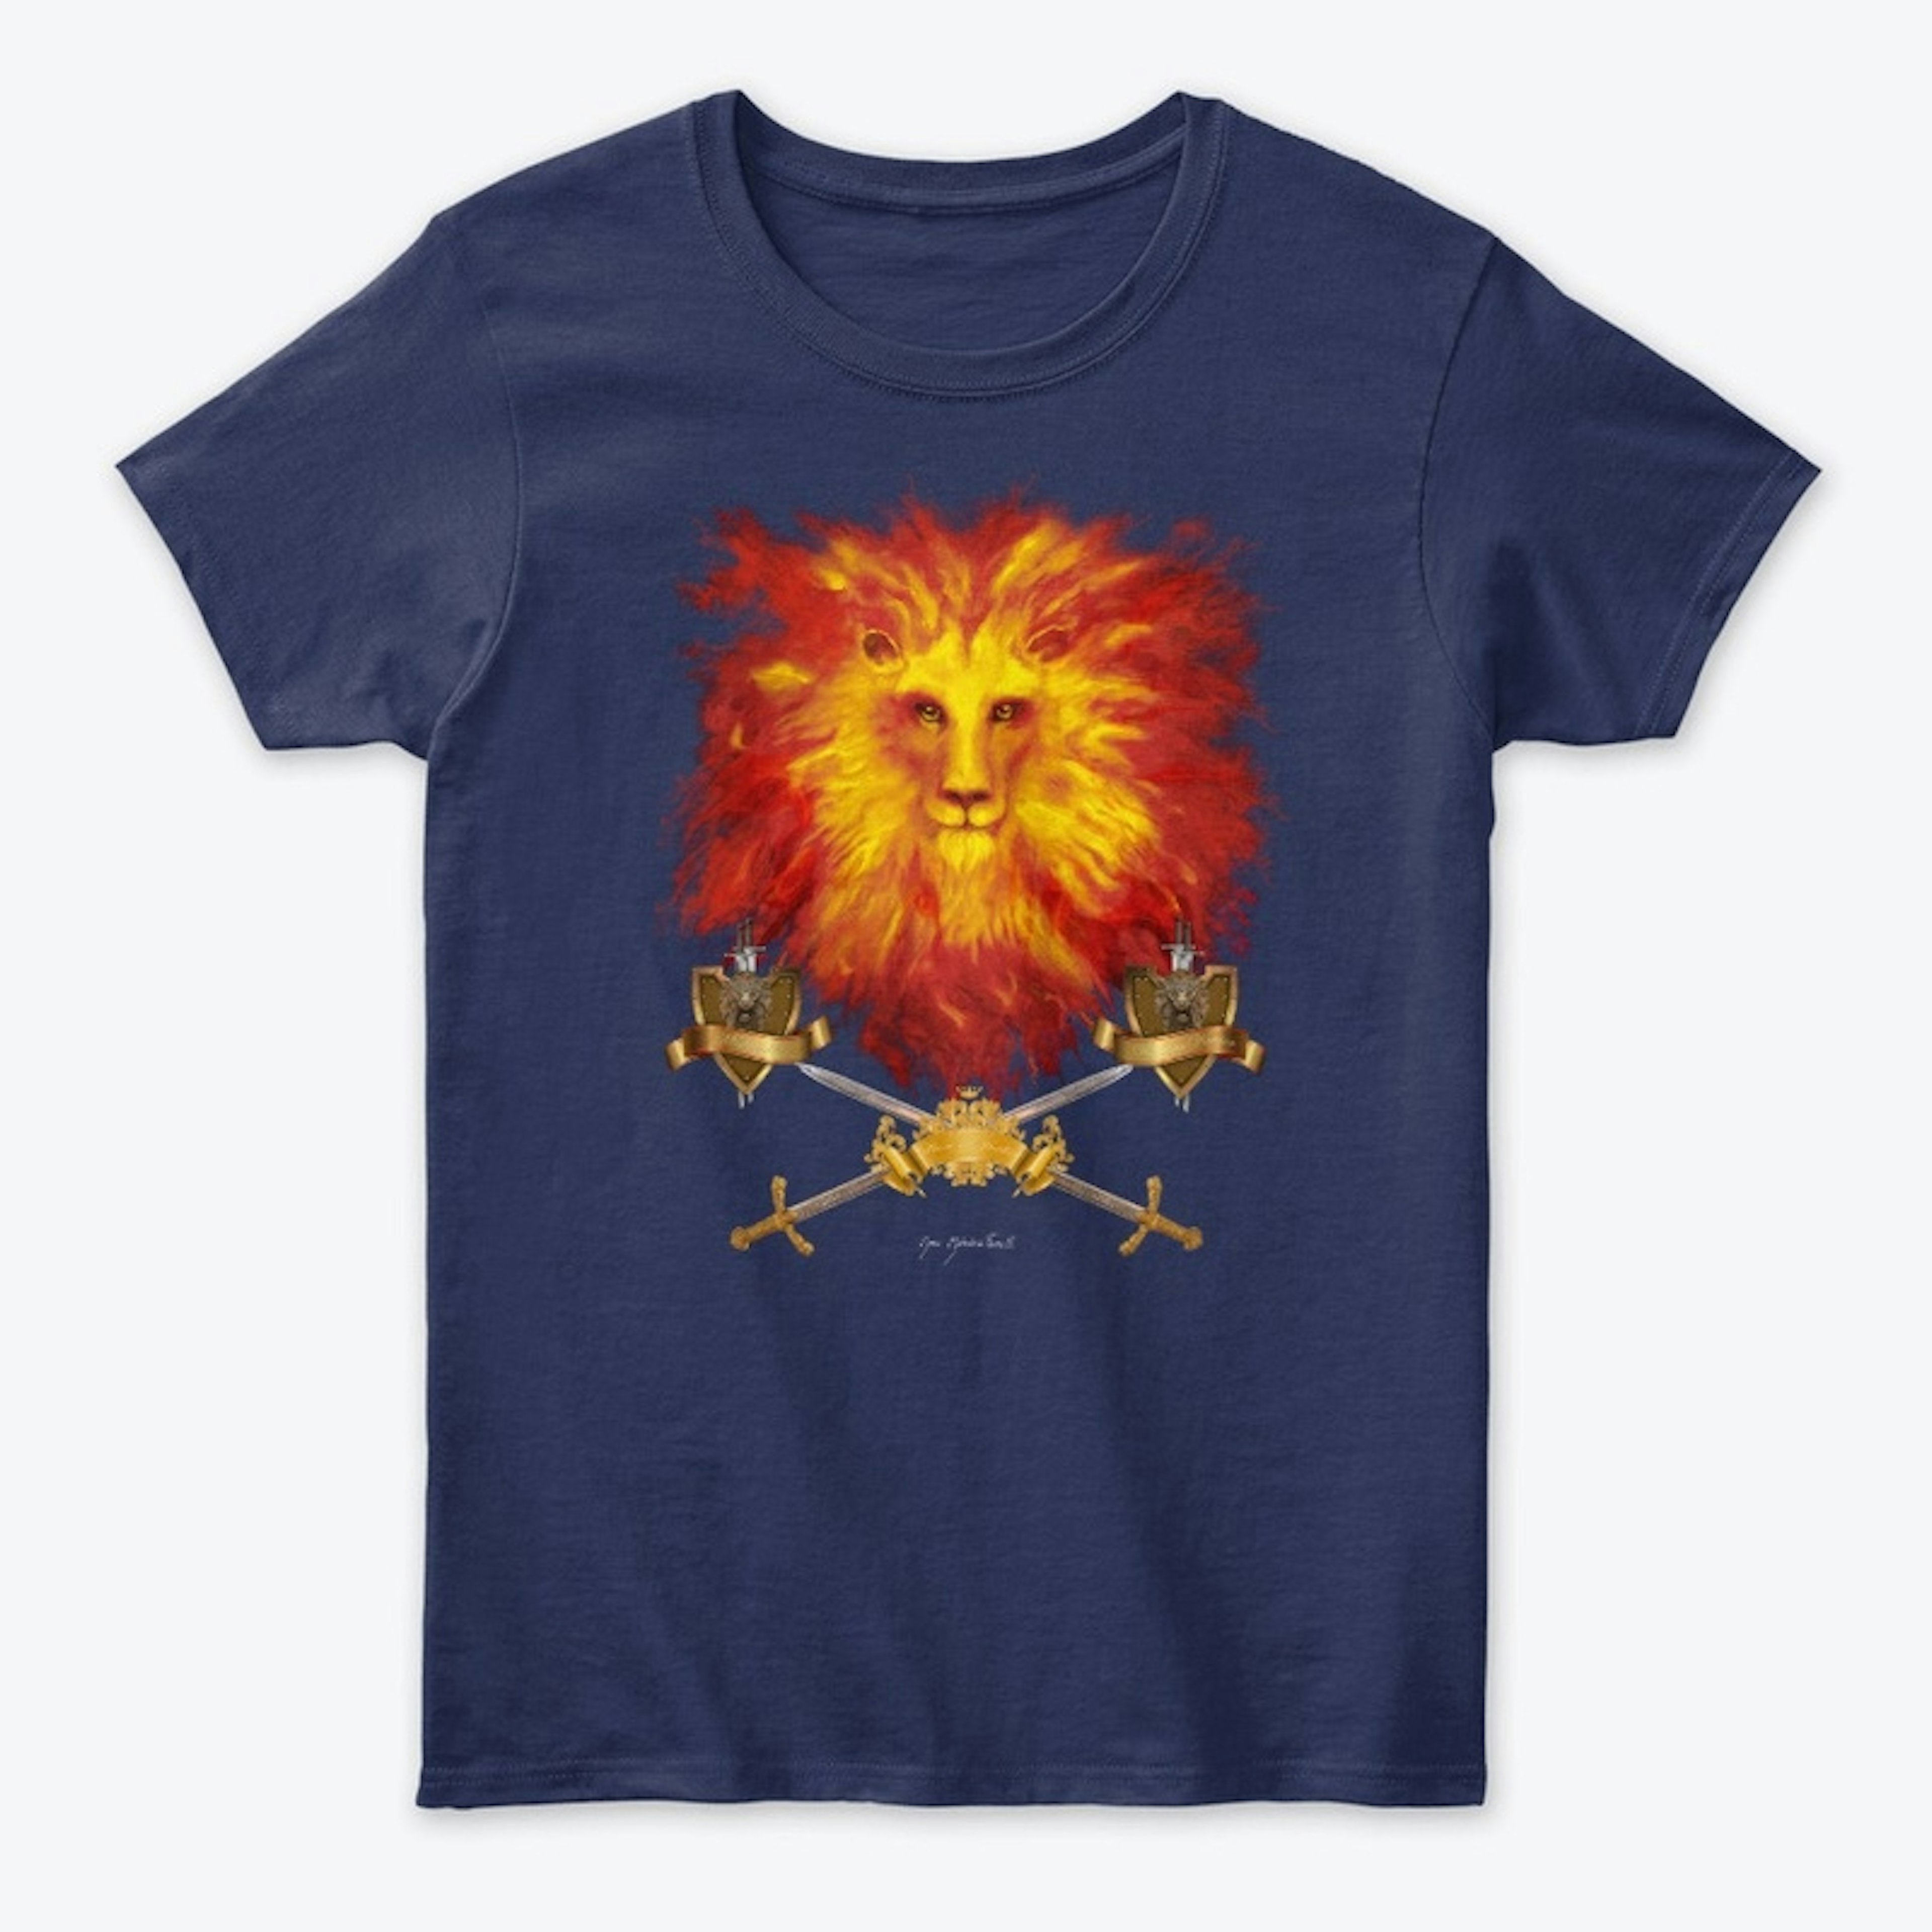 Lion of Judah, Christian art t-shirt